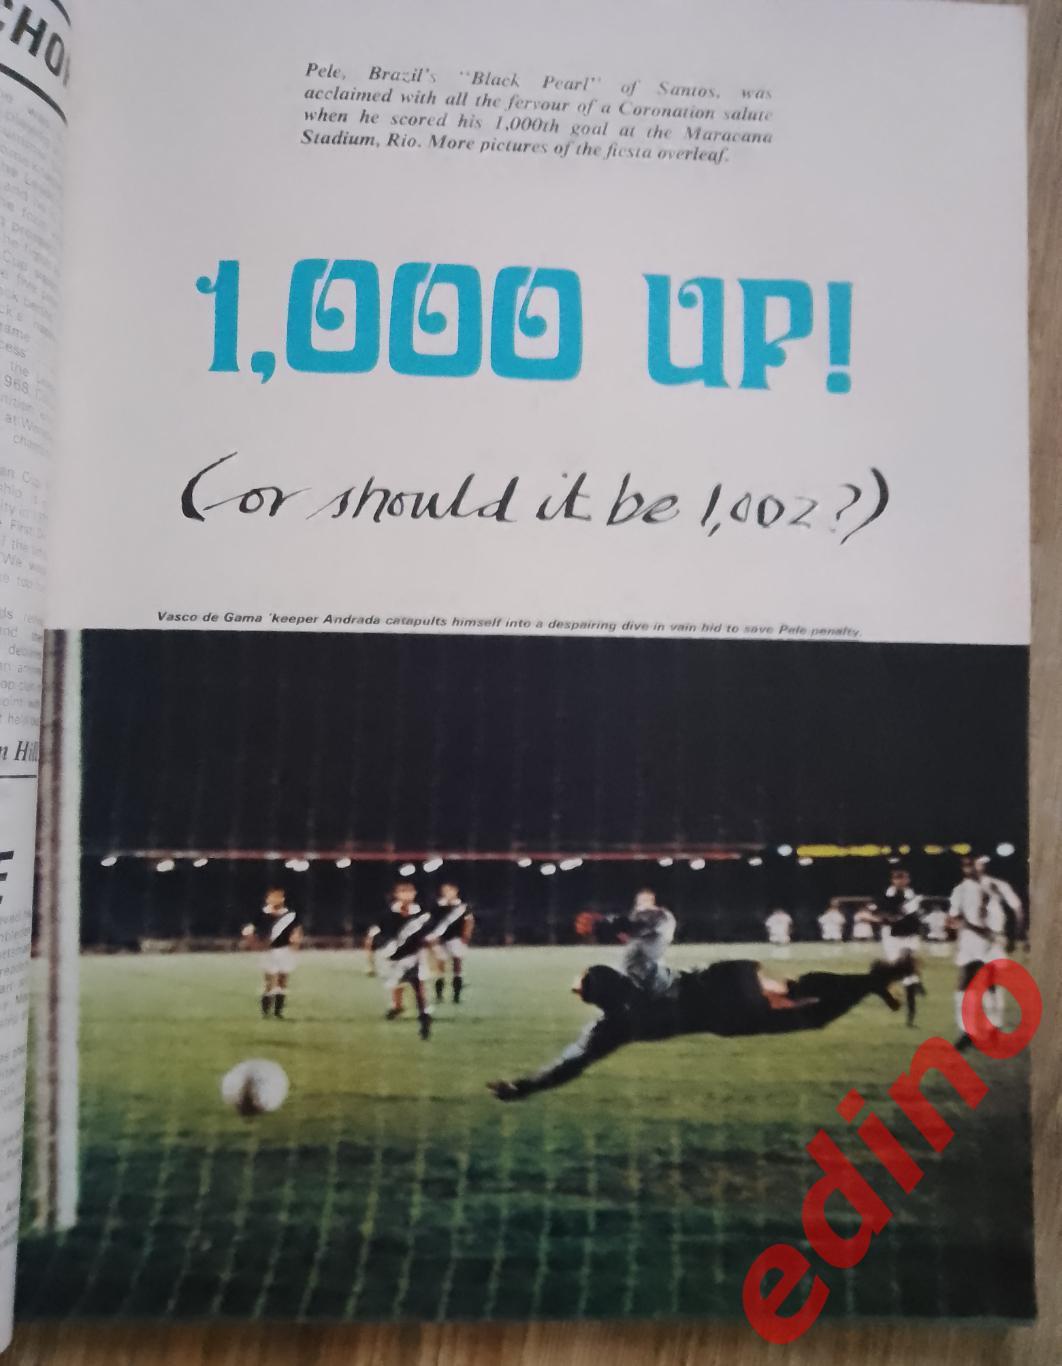 World Sport 1970 г. 1000-ый гол ПЕЛЕ 4